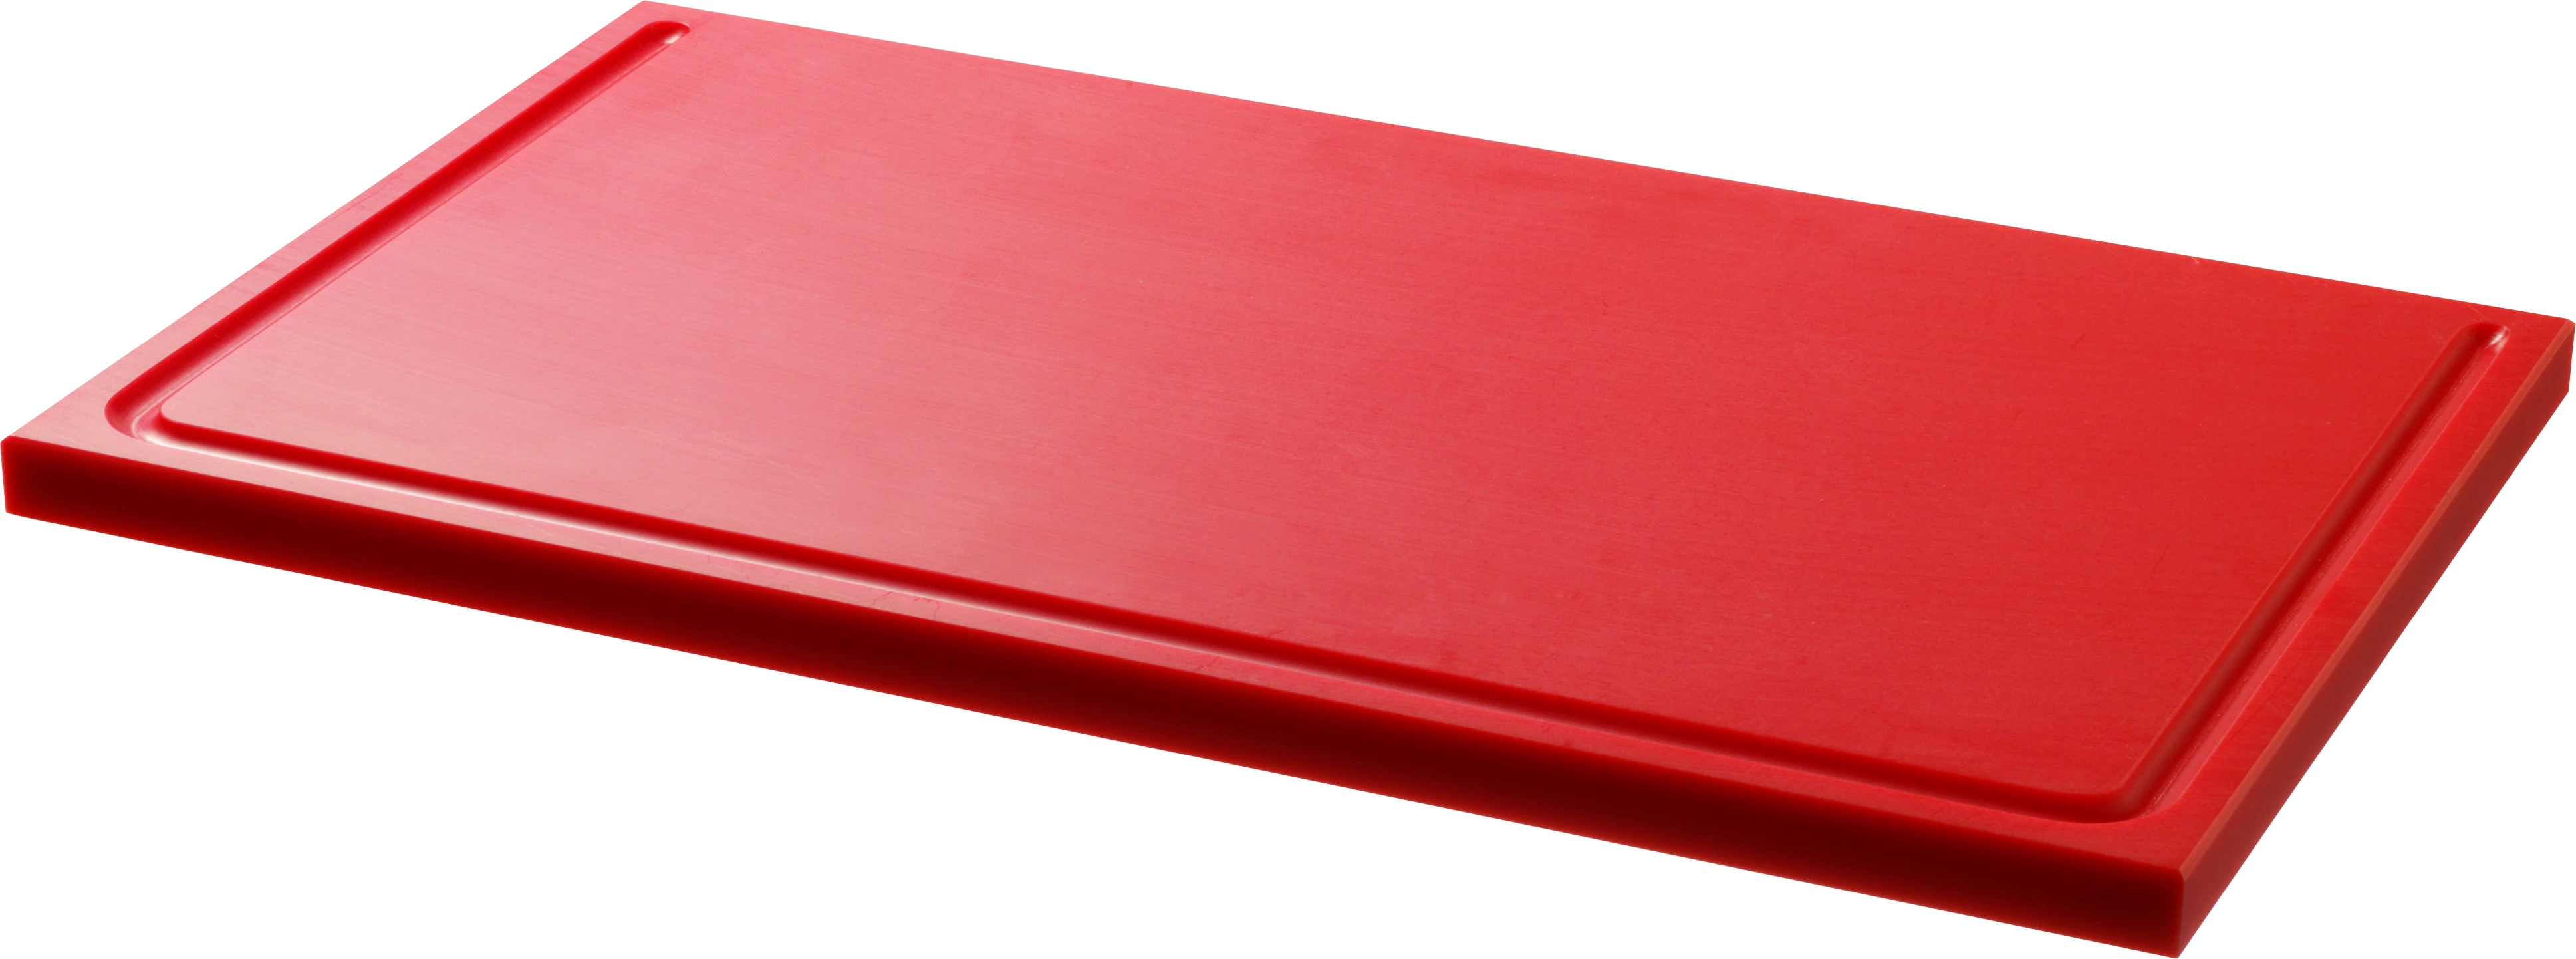 Euroboard skæreplanke, rød, 50 x 30 x 2 cm